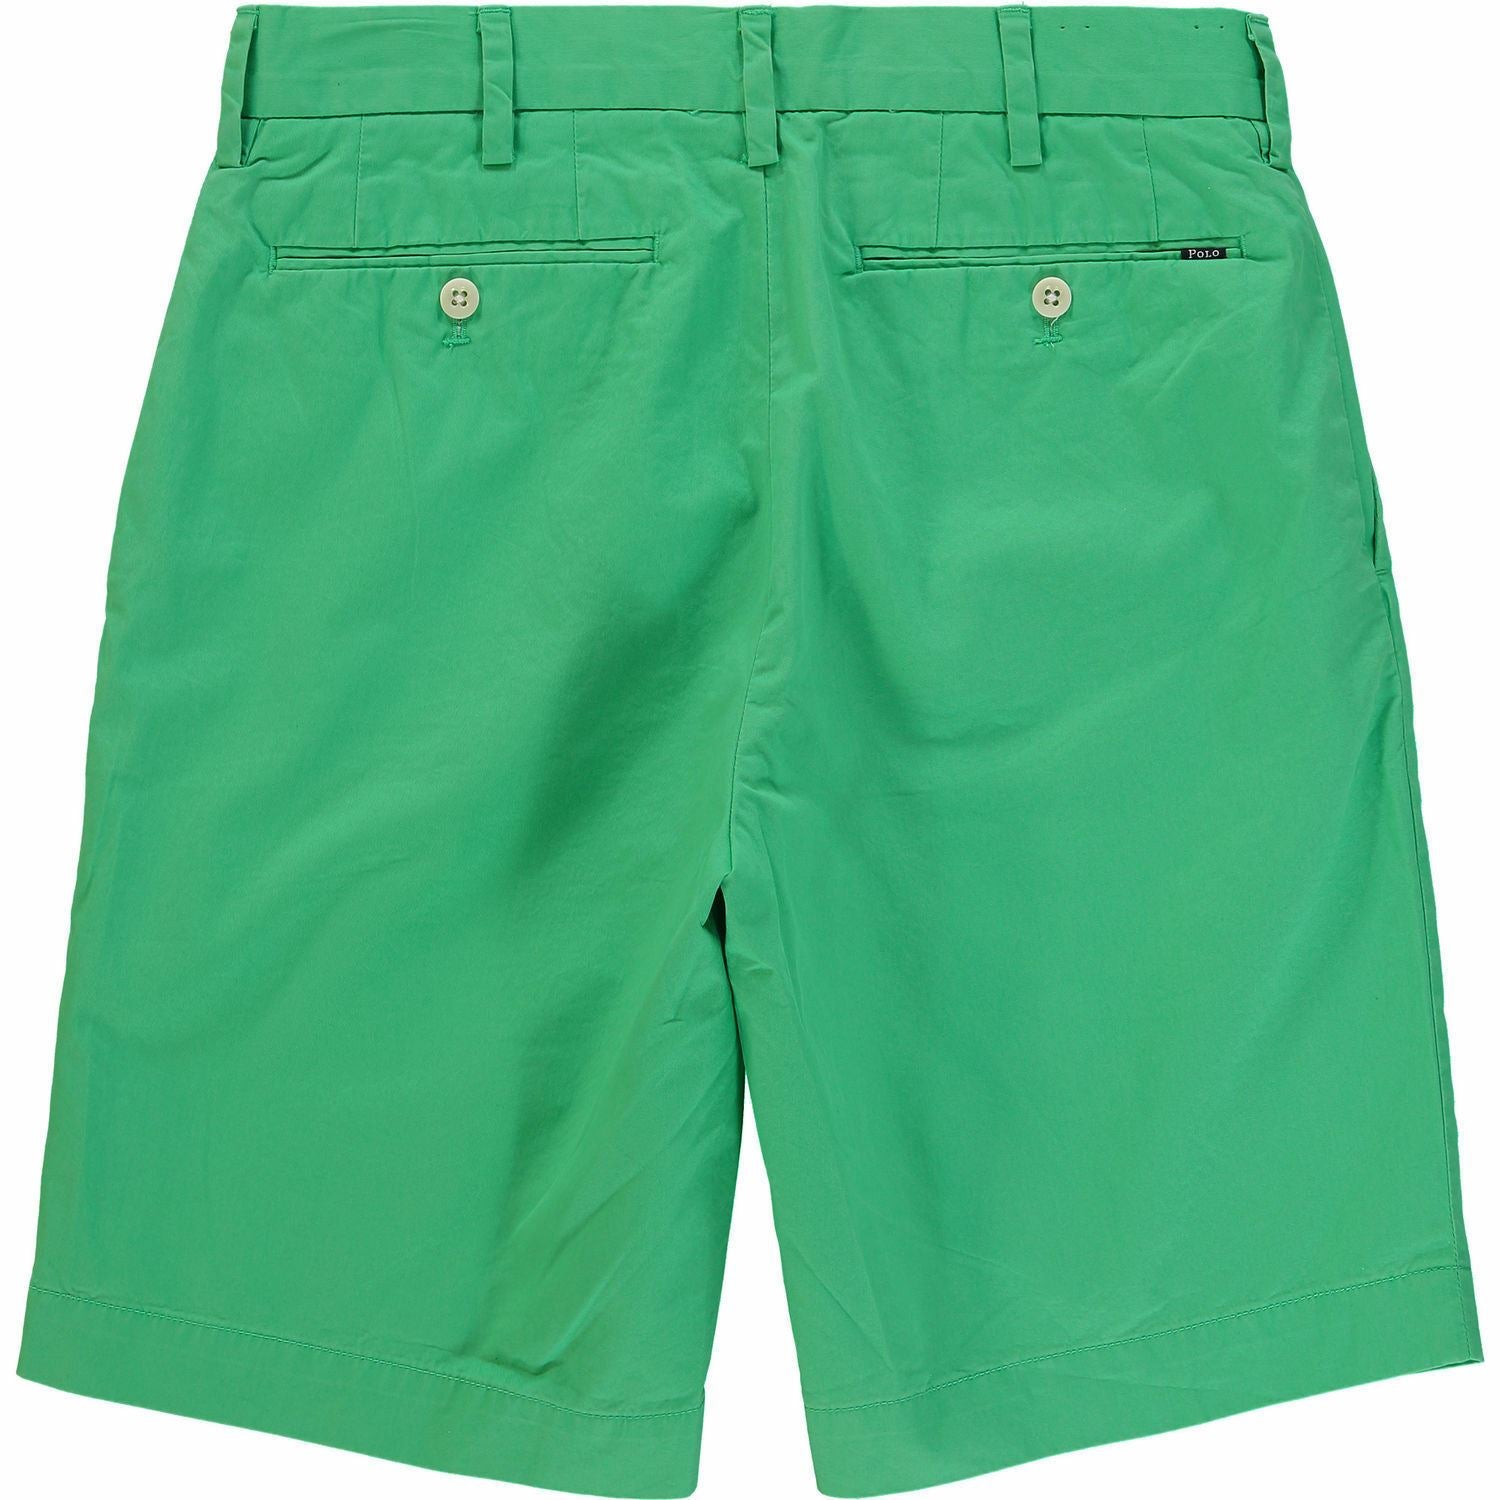 POLO RALPH LAUREN Men's Chino Shorts, Grass Green, W28